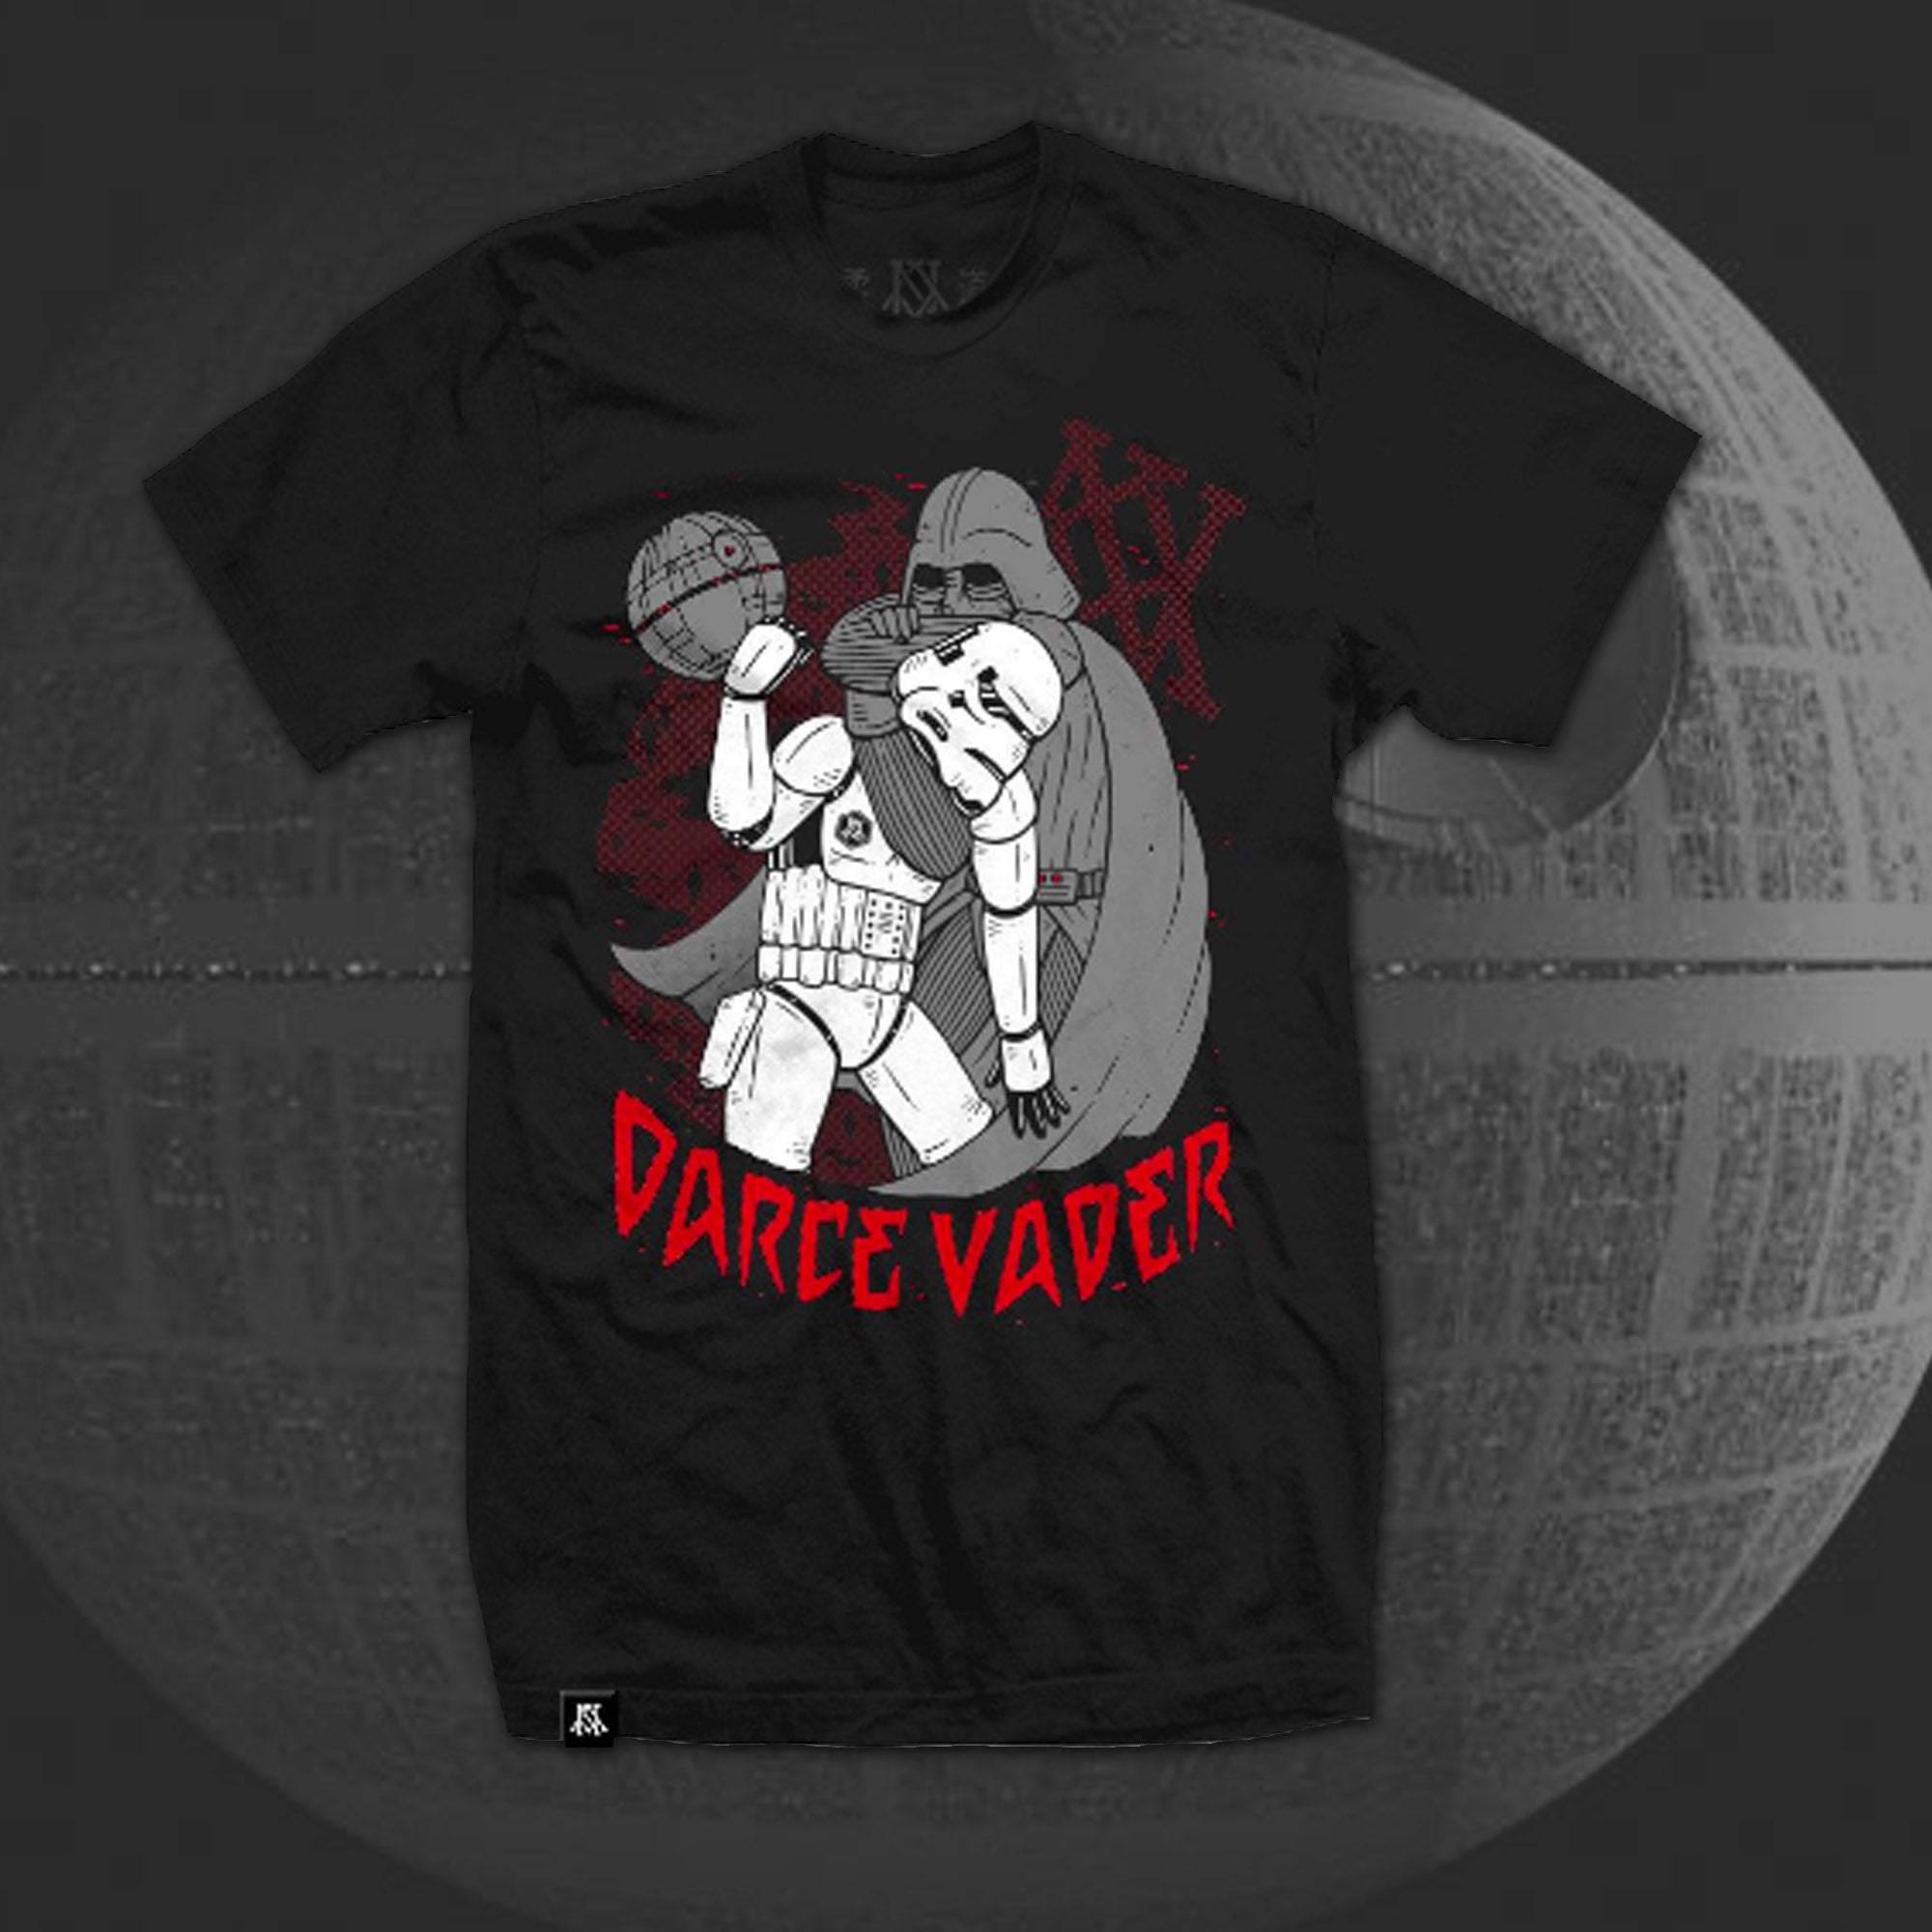 Darce Vader Tee - Black